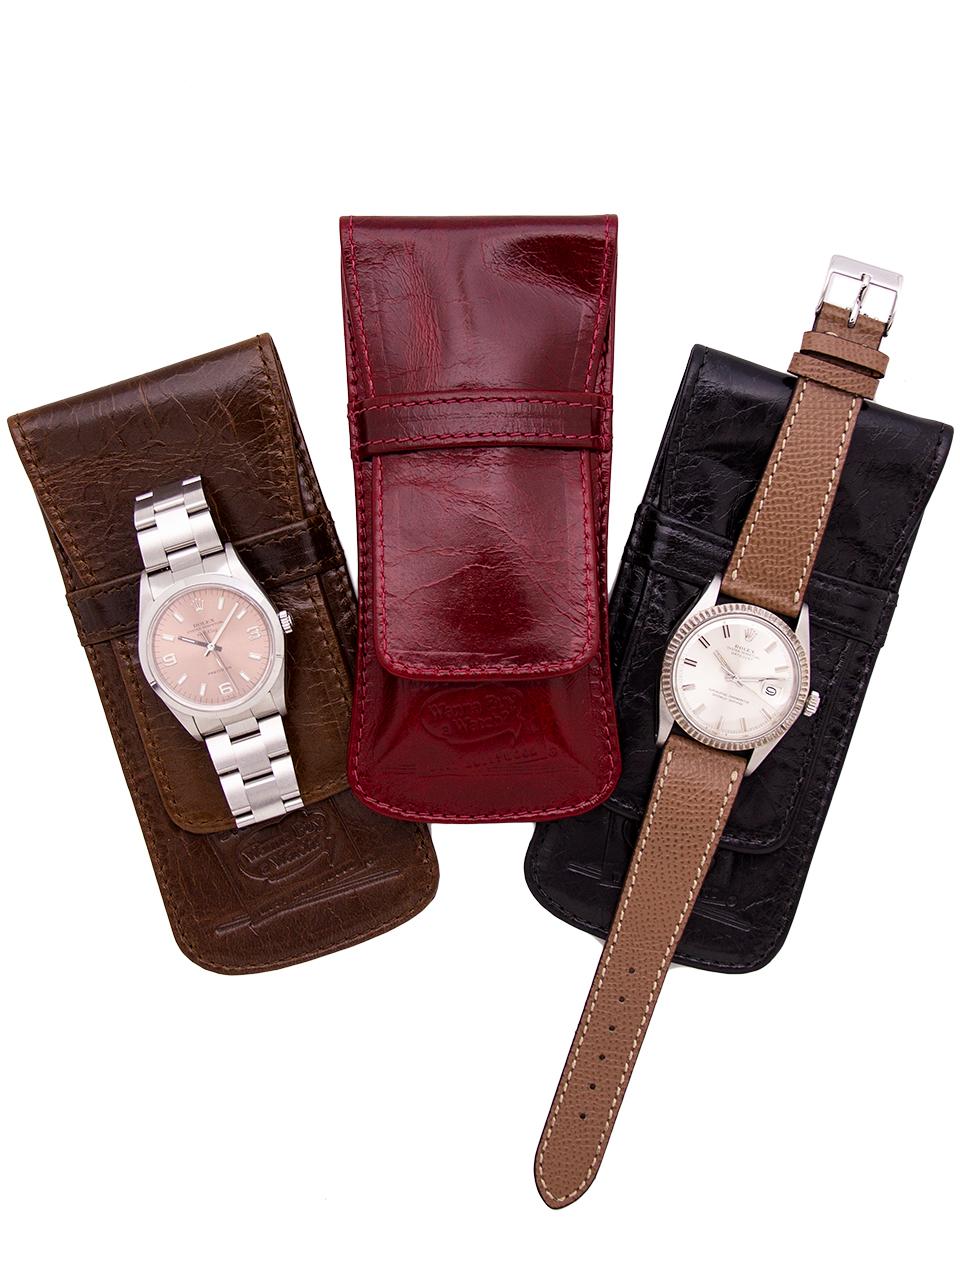 Men's Cartier Stainless Steel Pasha C “Big Date” wristwatch, circa 2000s